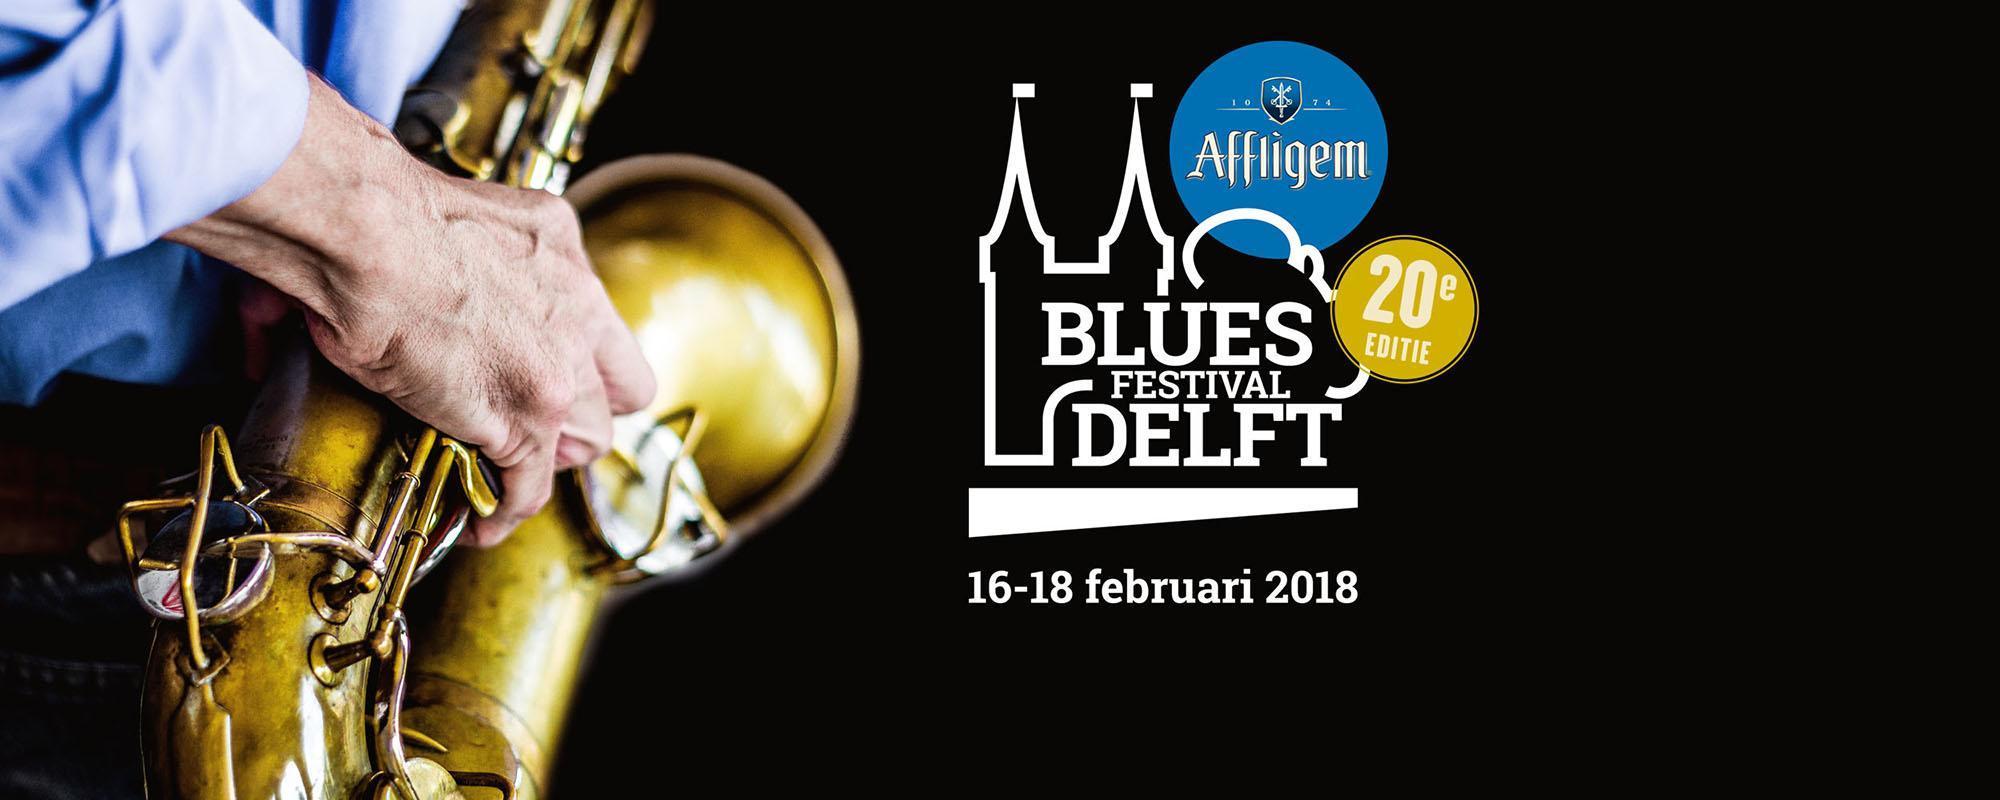 BIG BO - Preaching The Blues - Affligem Bluesfestival Delft